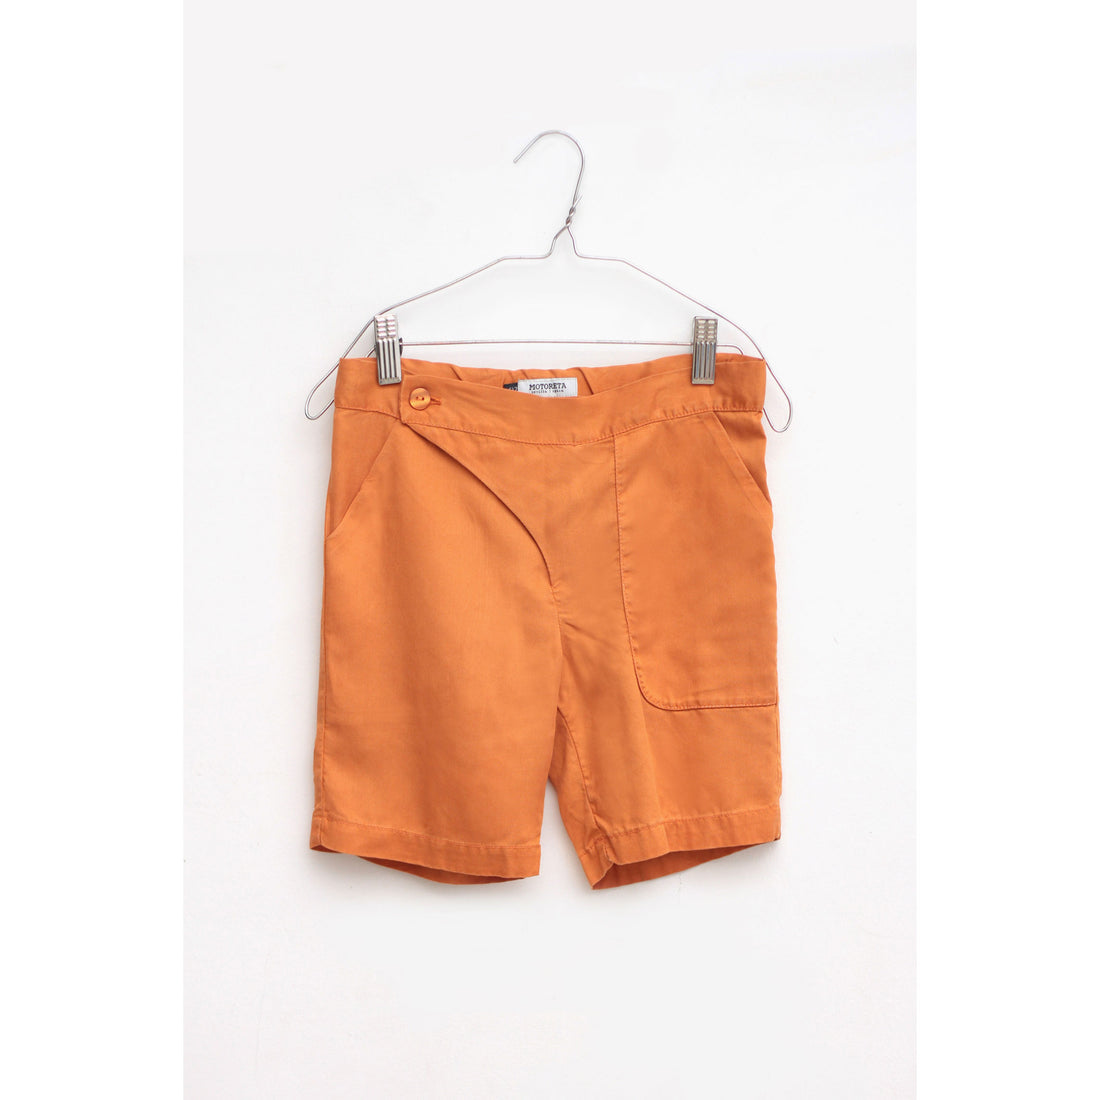 Motoreta Orange Pocket Shorts